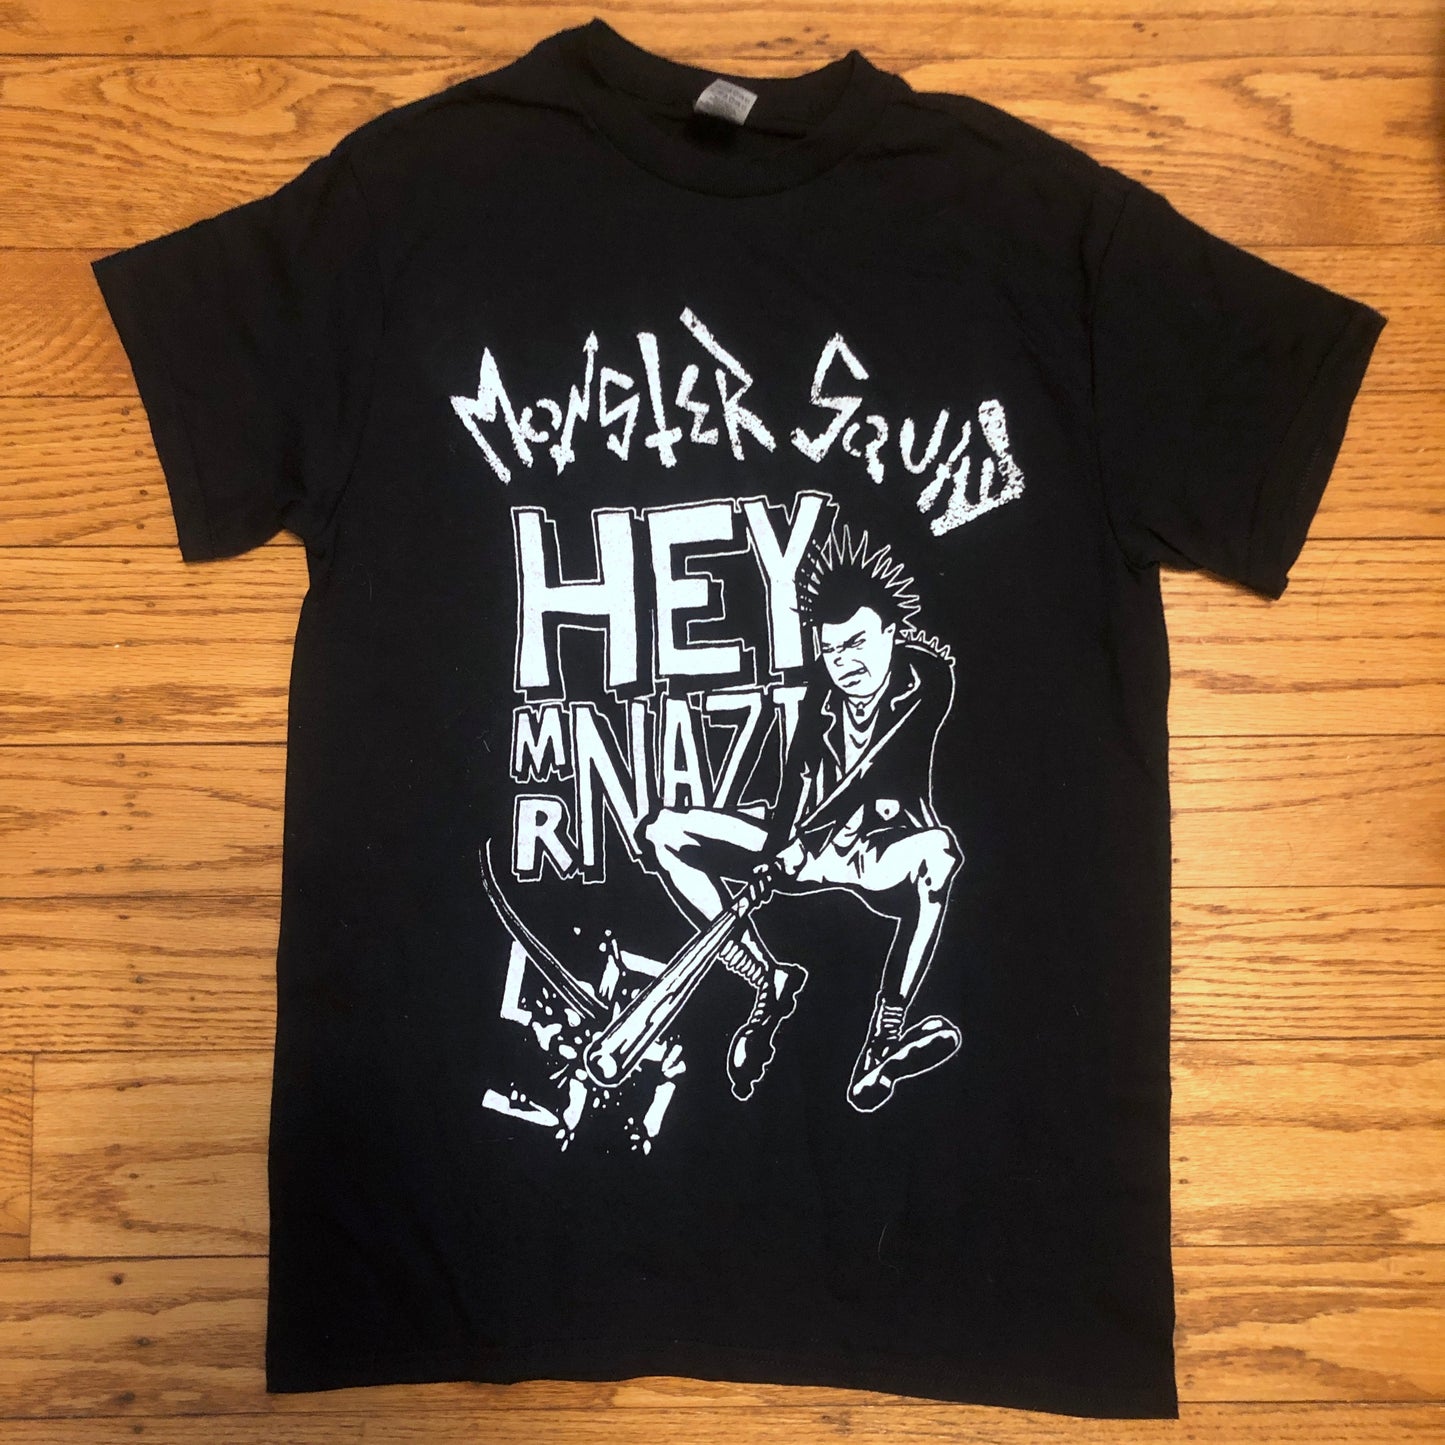 Monster Squad "Hey Mr Nazi!" T-Shirt